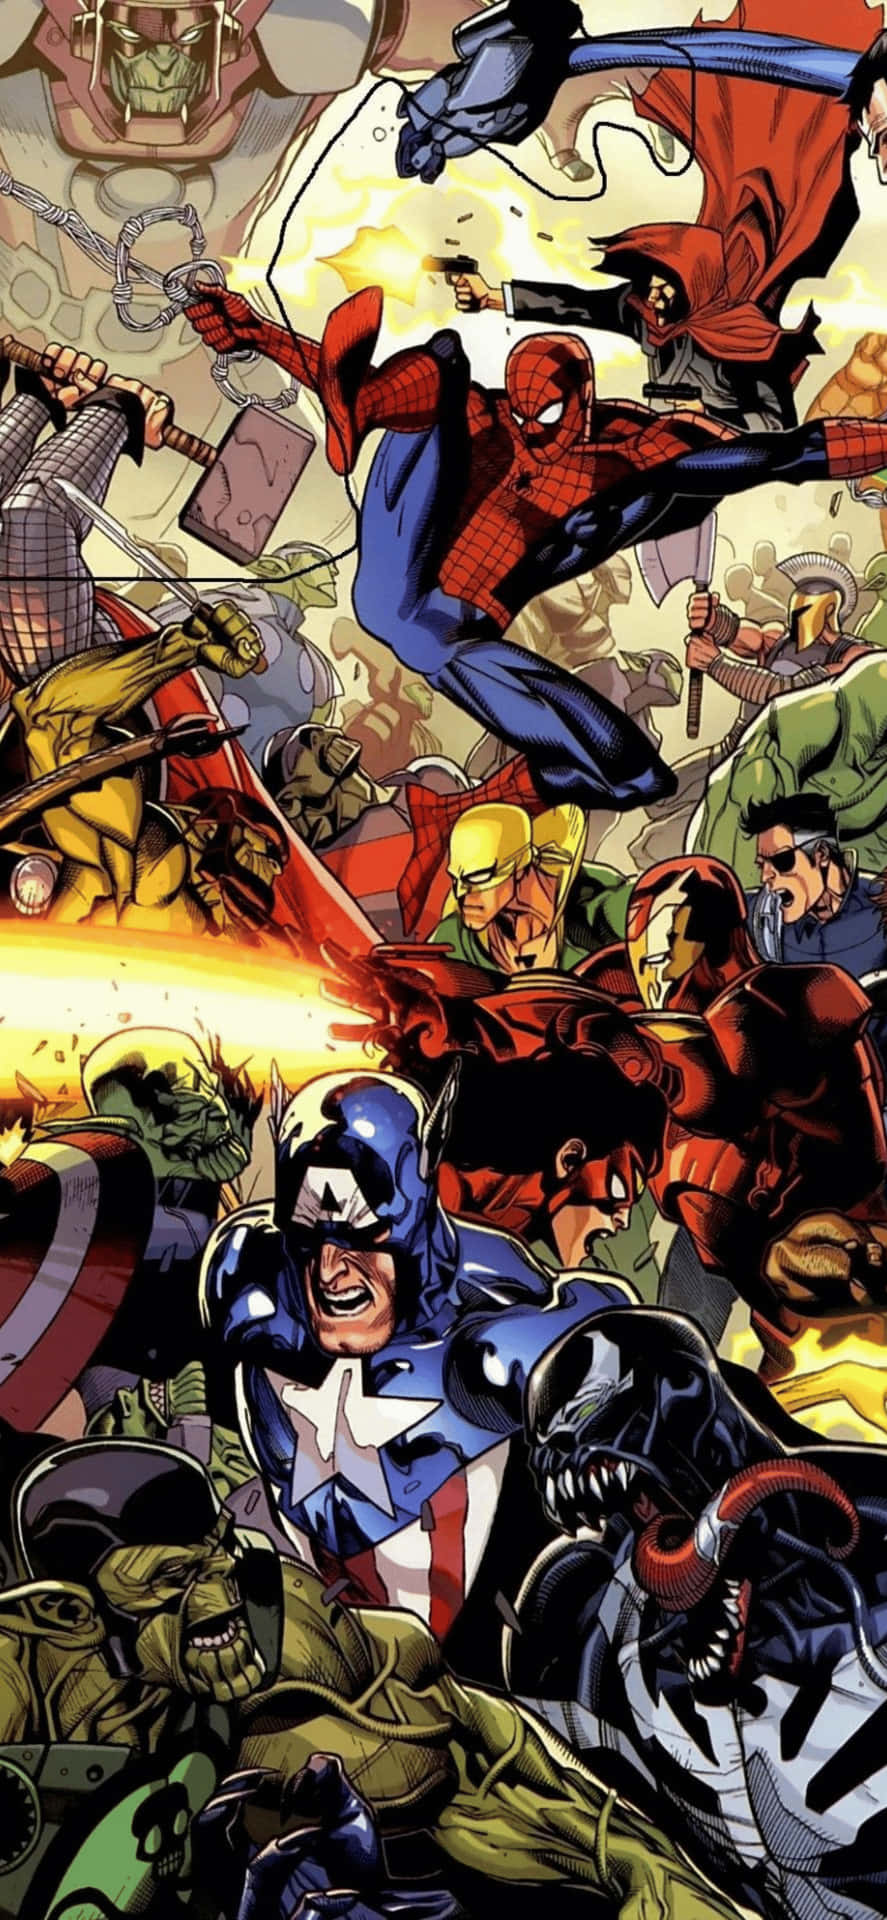 Iphonexs Max Bakgrund I Marvel-comicstil.